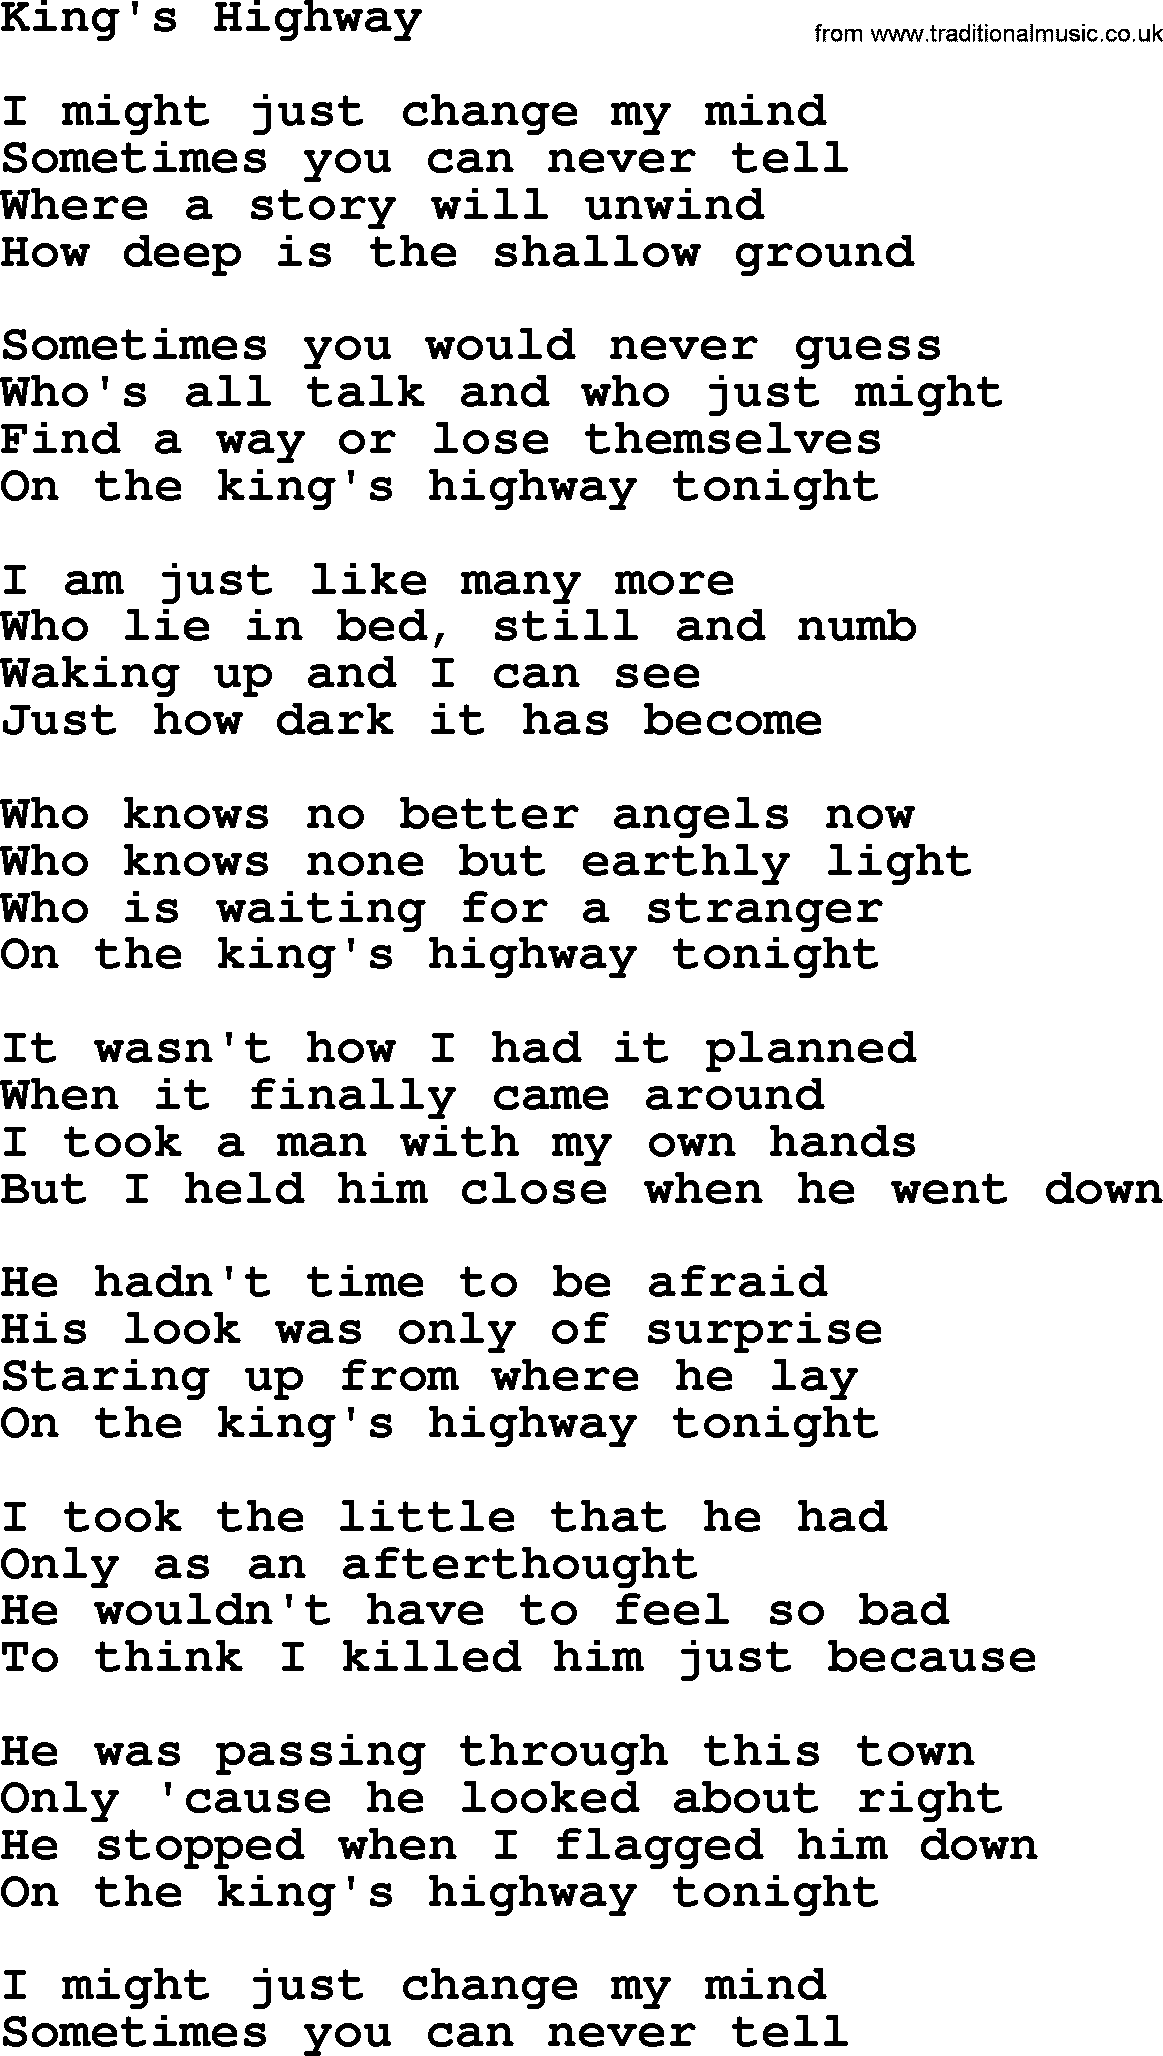 Joan Baez song King's Highway, lyrics